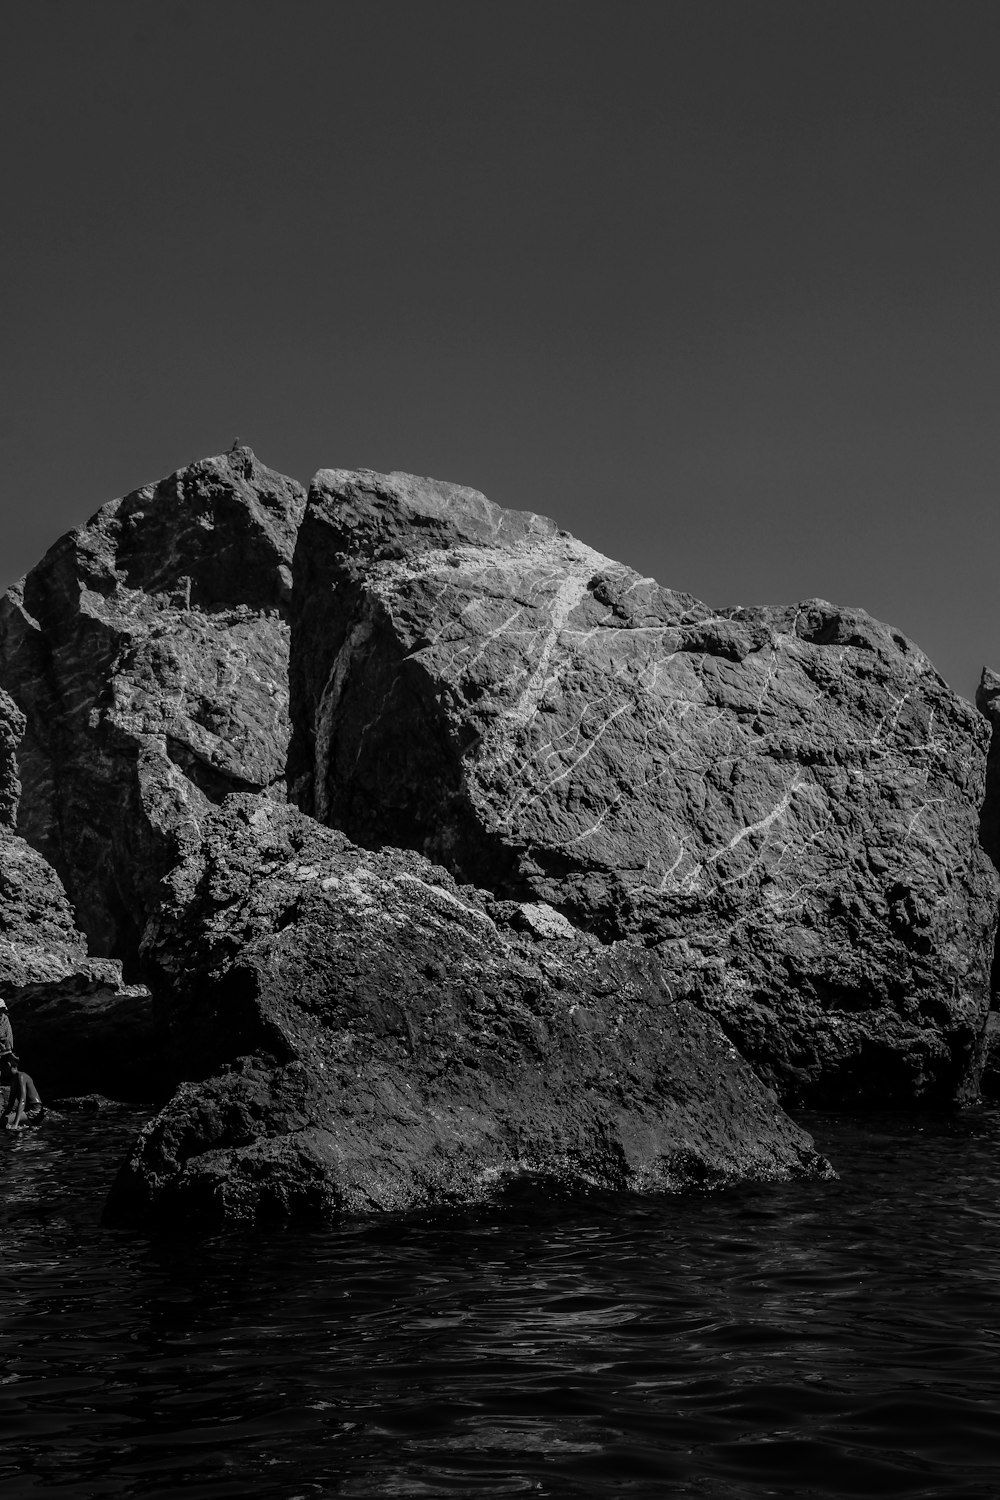 grayscale photo of rocky mountain near body of water